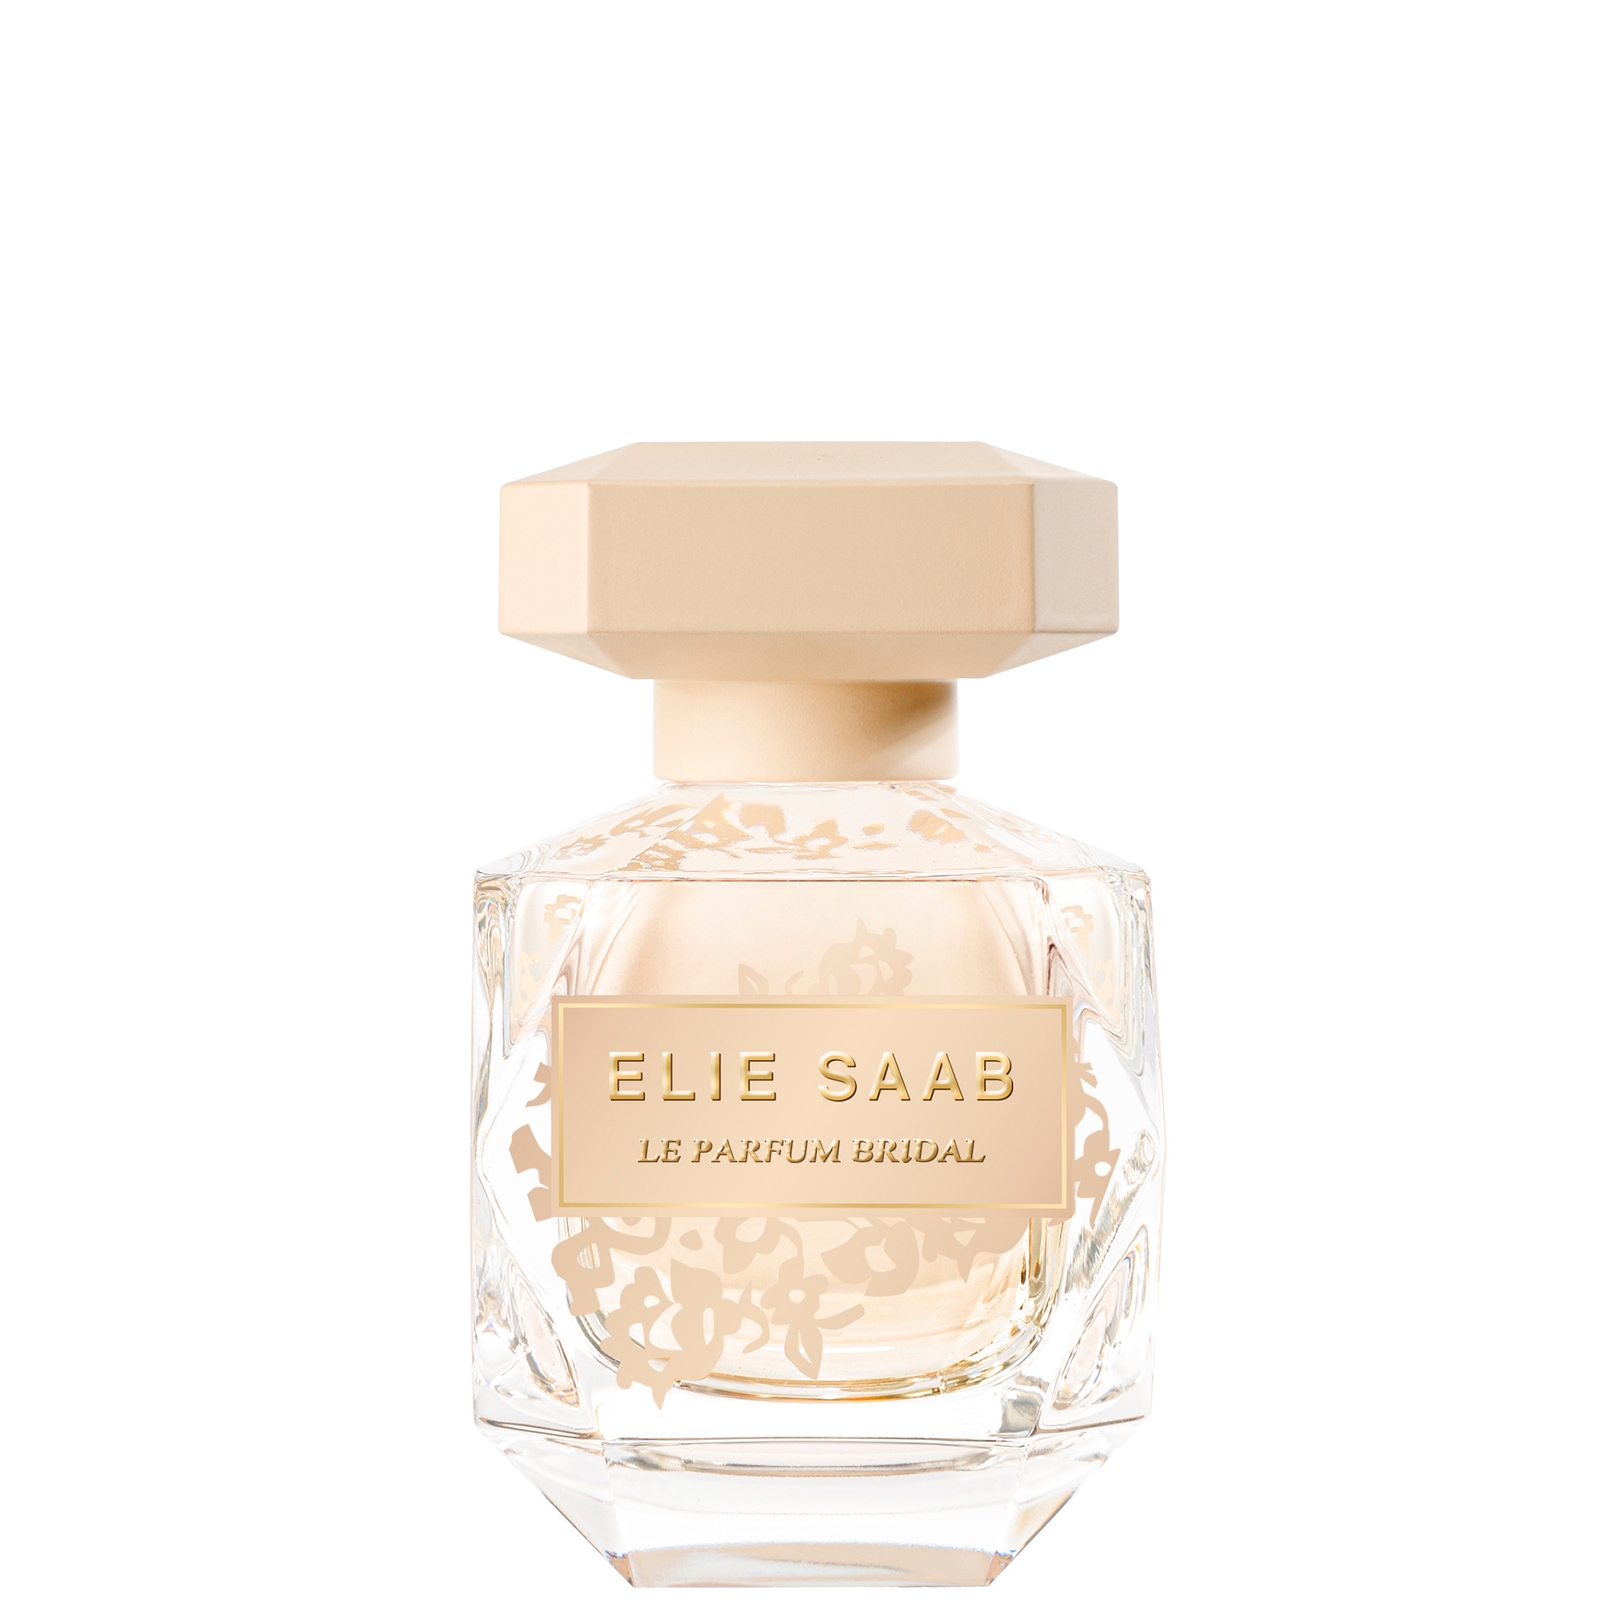 Image of Elie Saab Le Parfum Bridal Eau de Parfum Profumo Spray 50ml